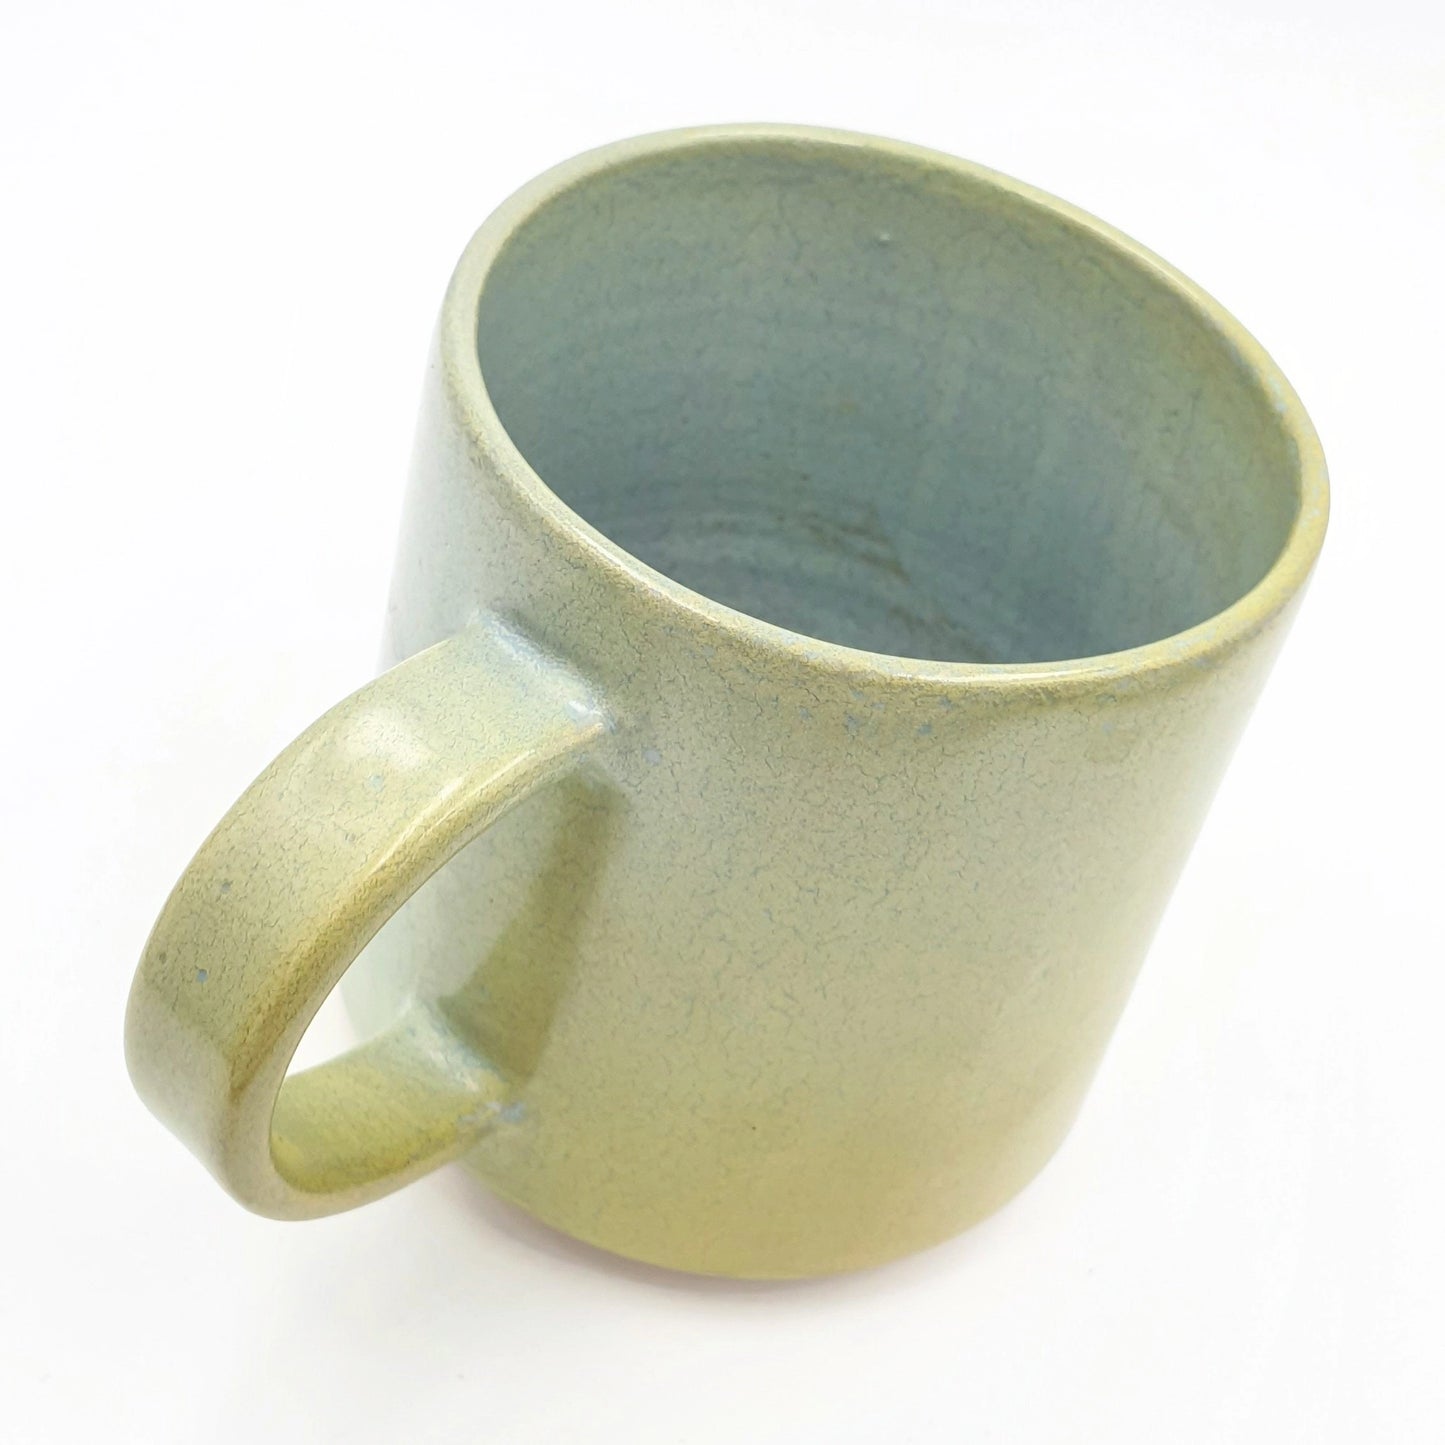 The One mug # new3